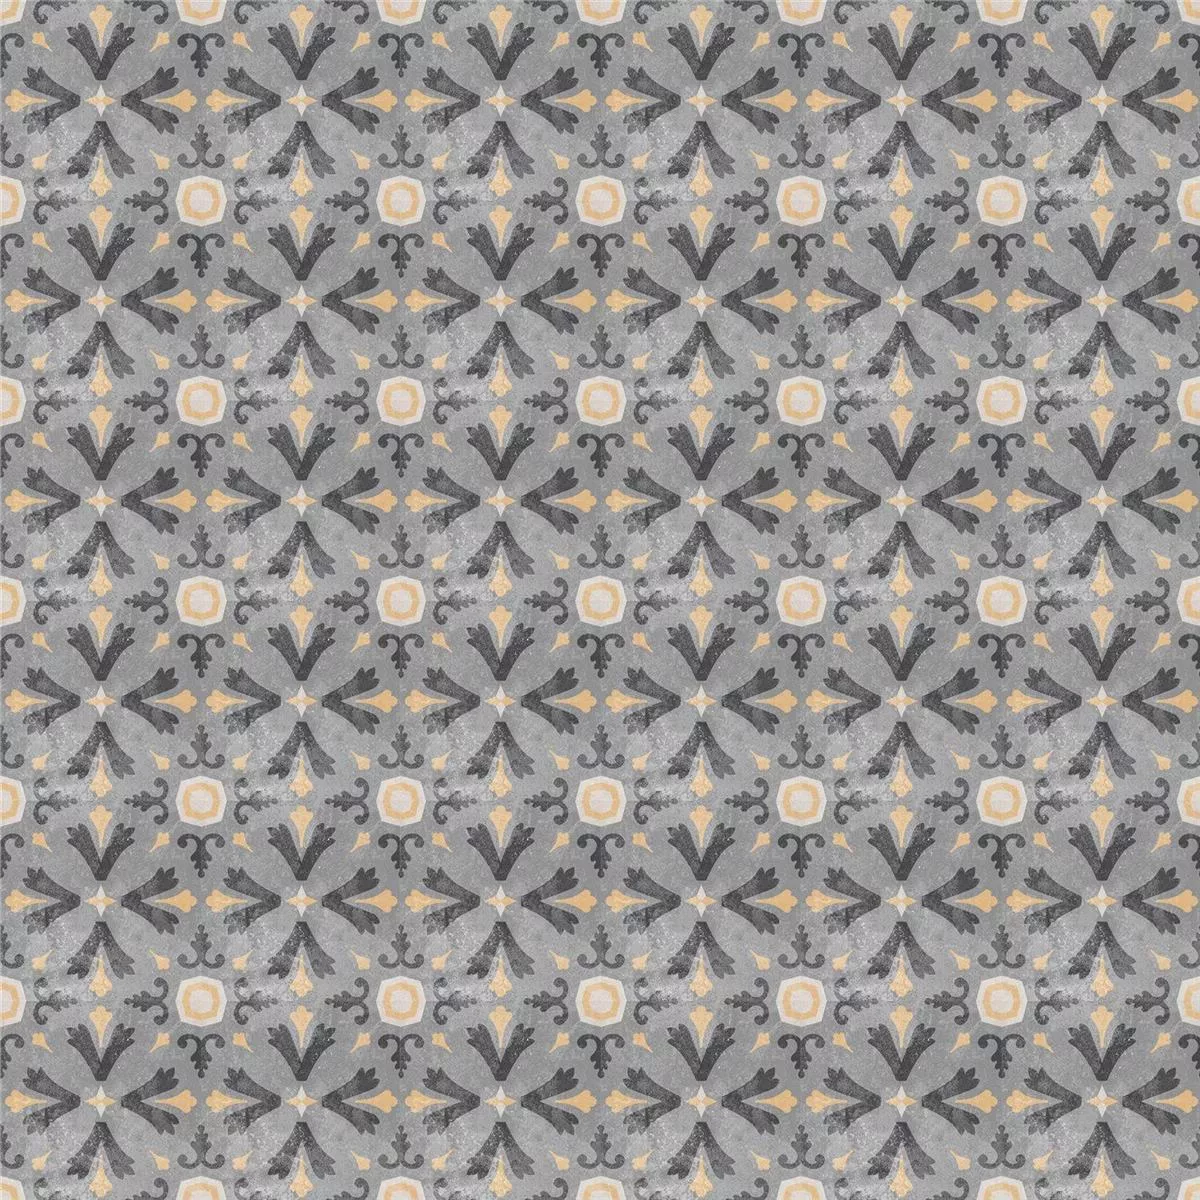 Sample Cement Tiles Retro Optic Gris Floor Tiles Juan 18,6x18,6cm